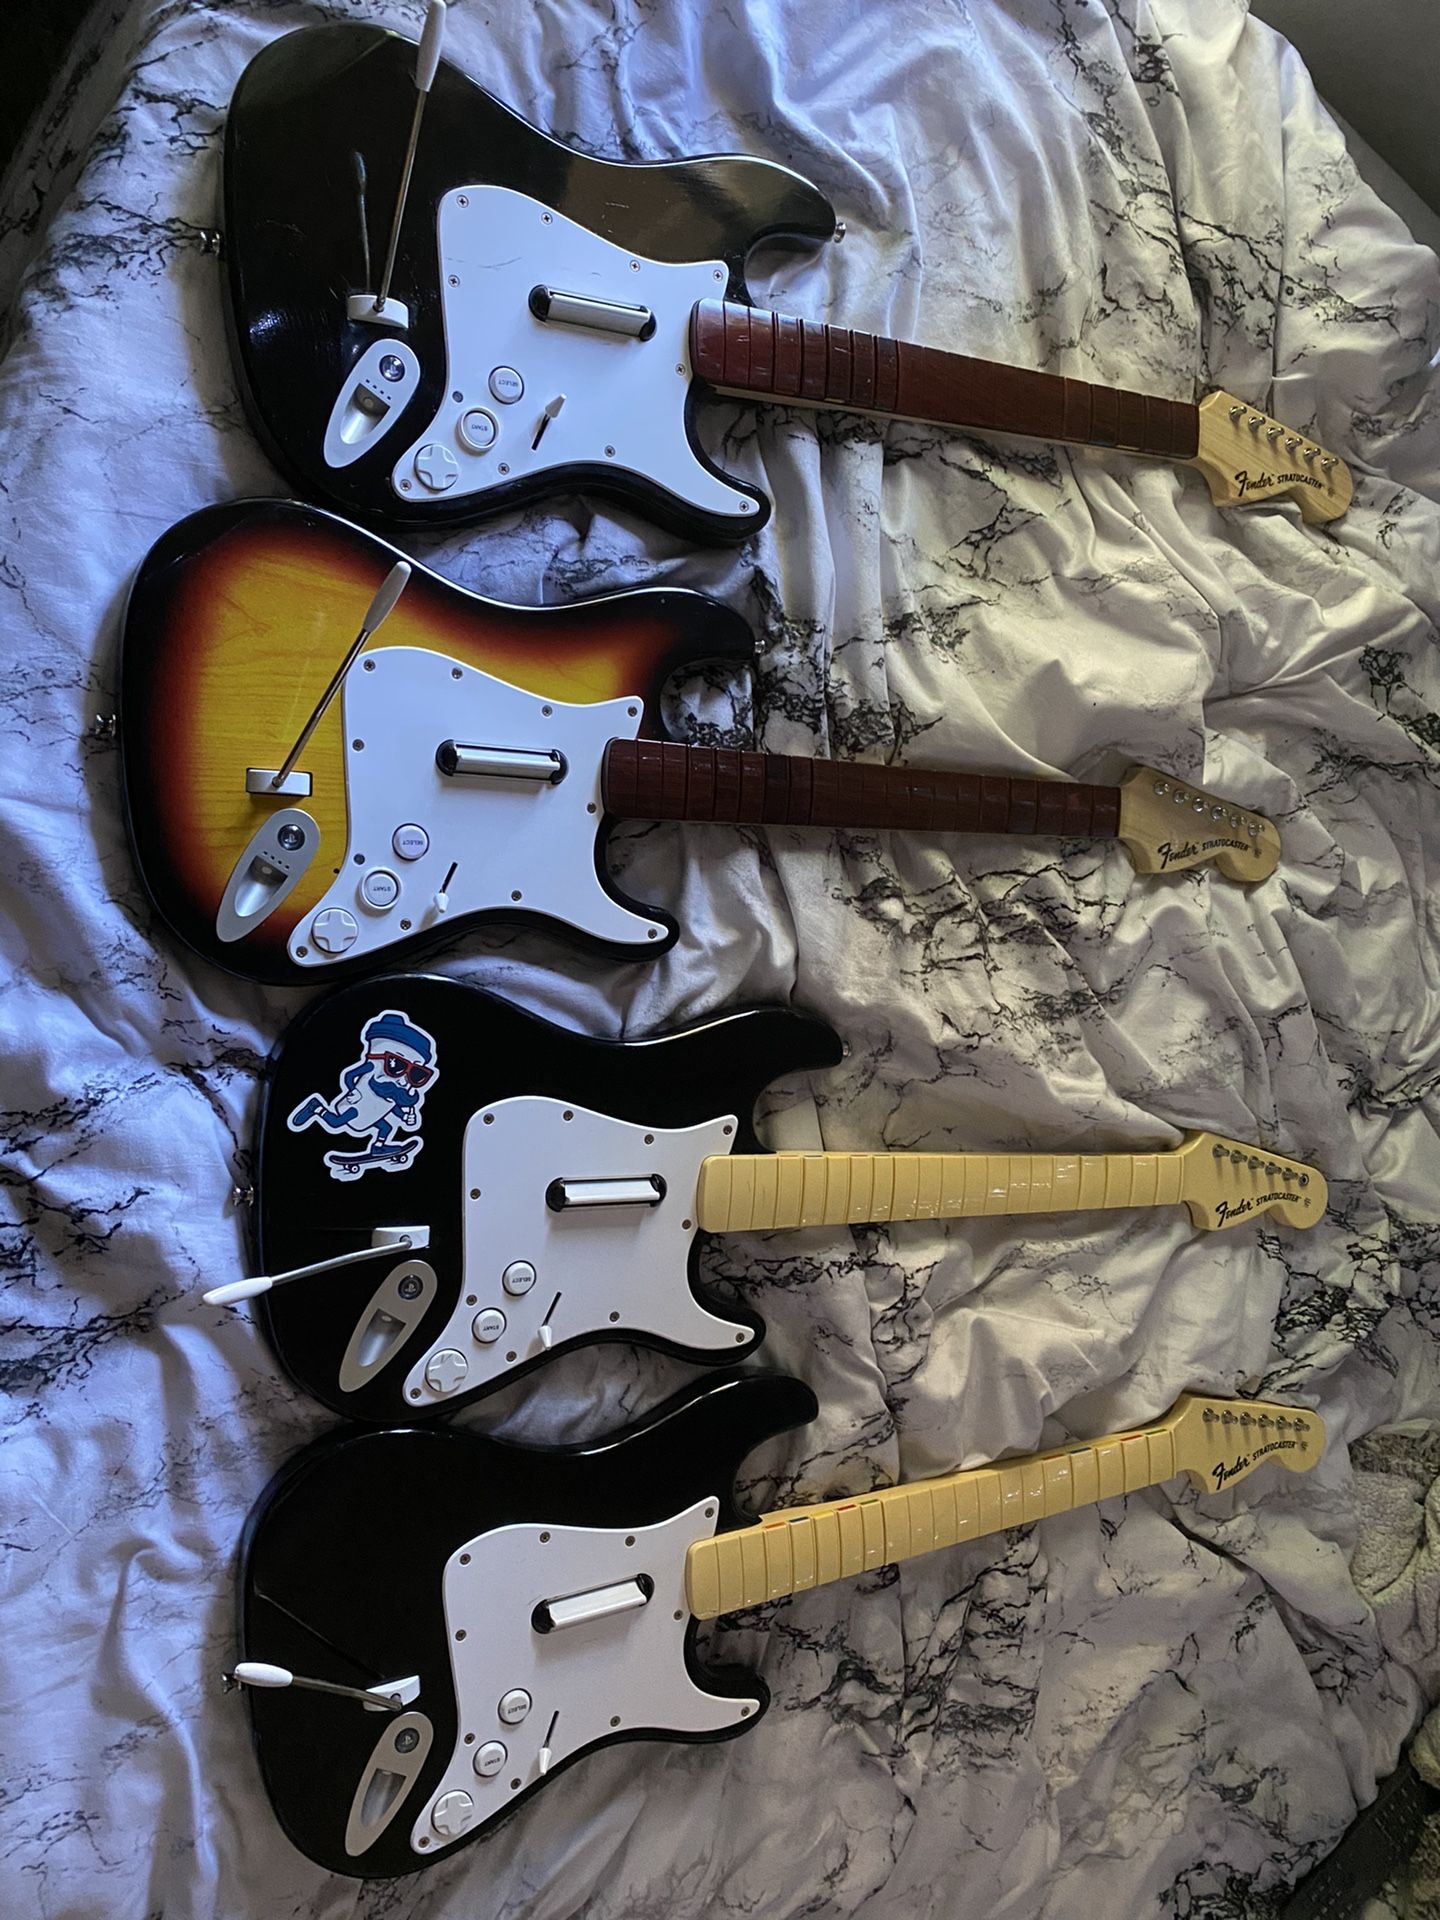 Rockband guitars